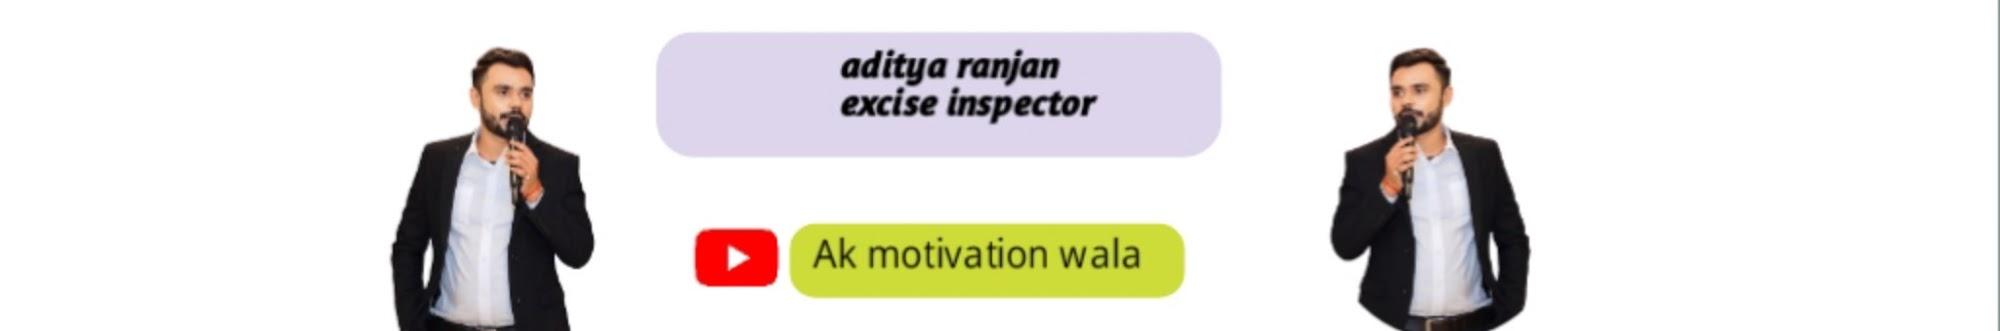 Ak motivation wala